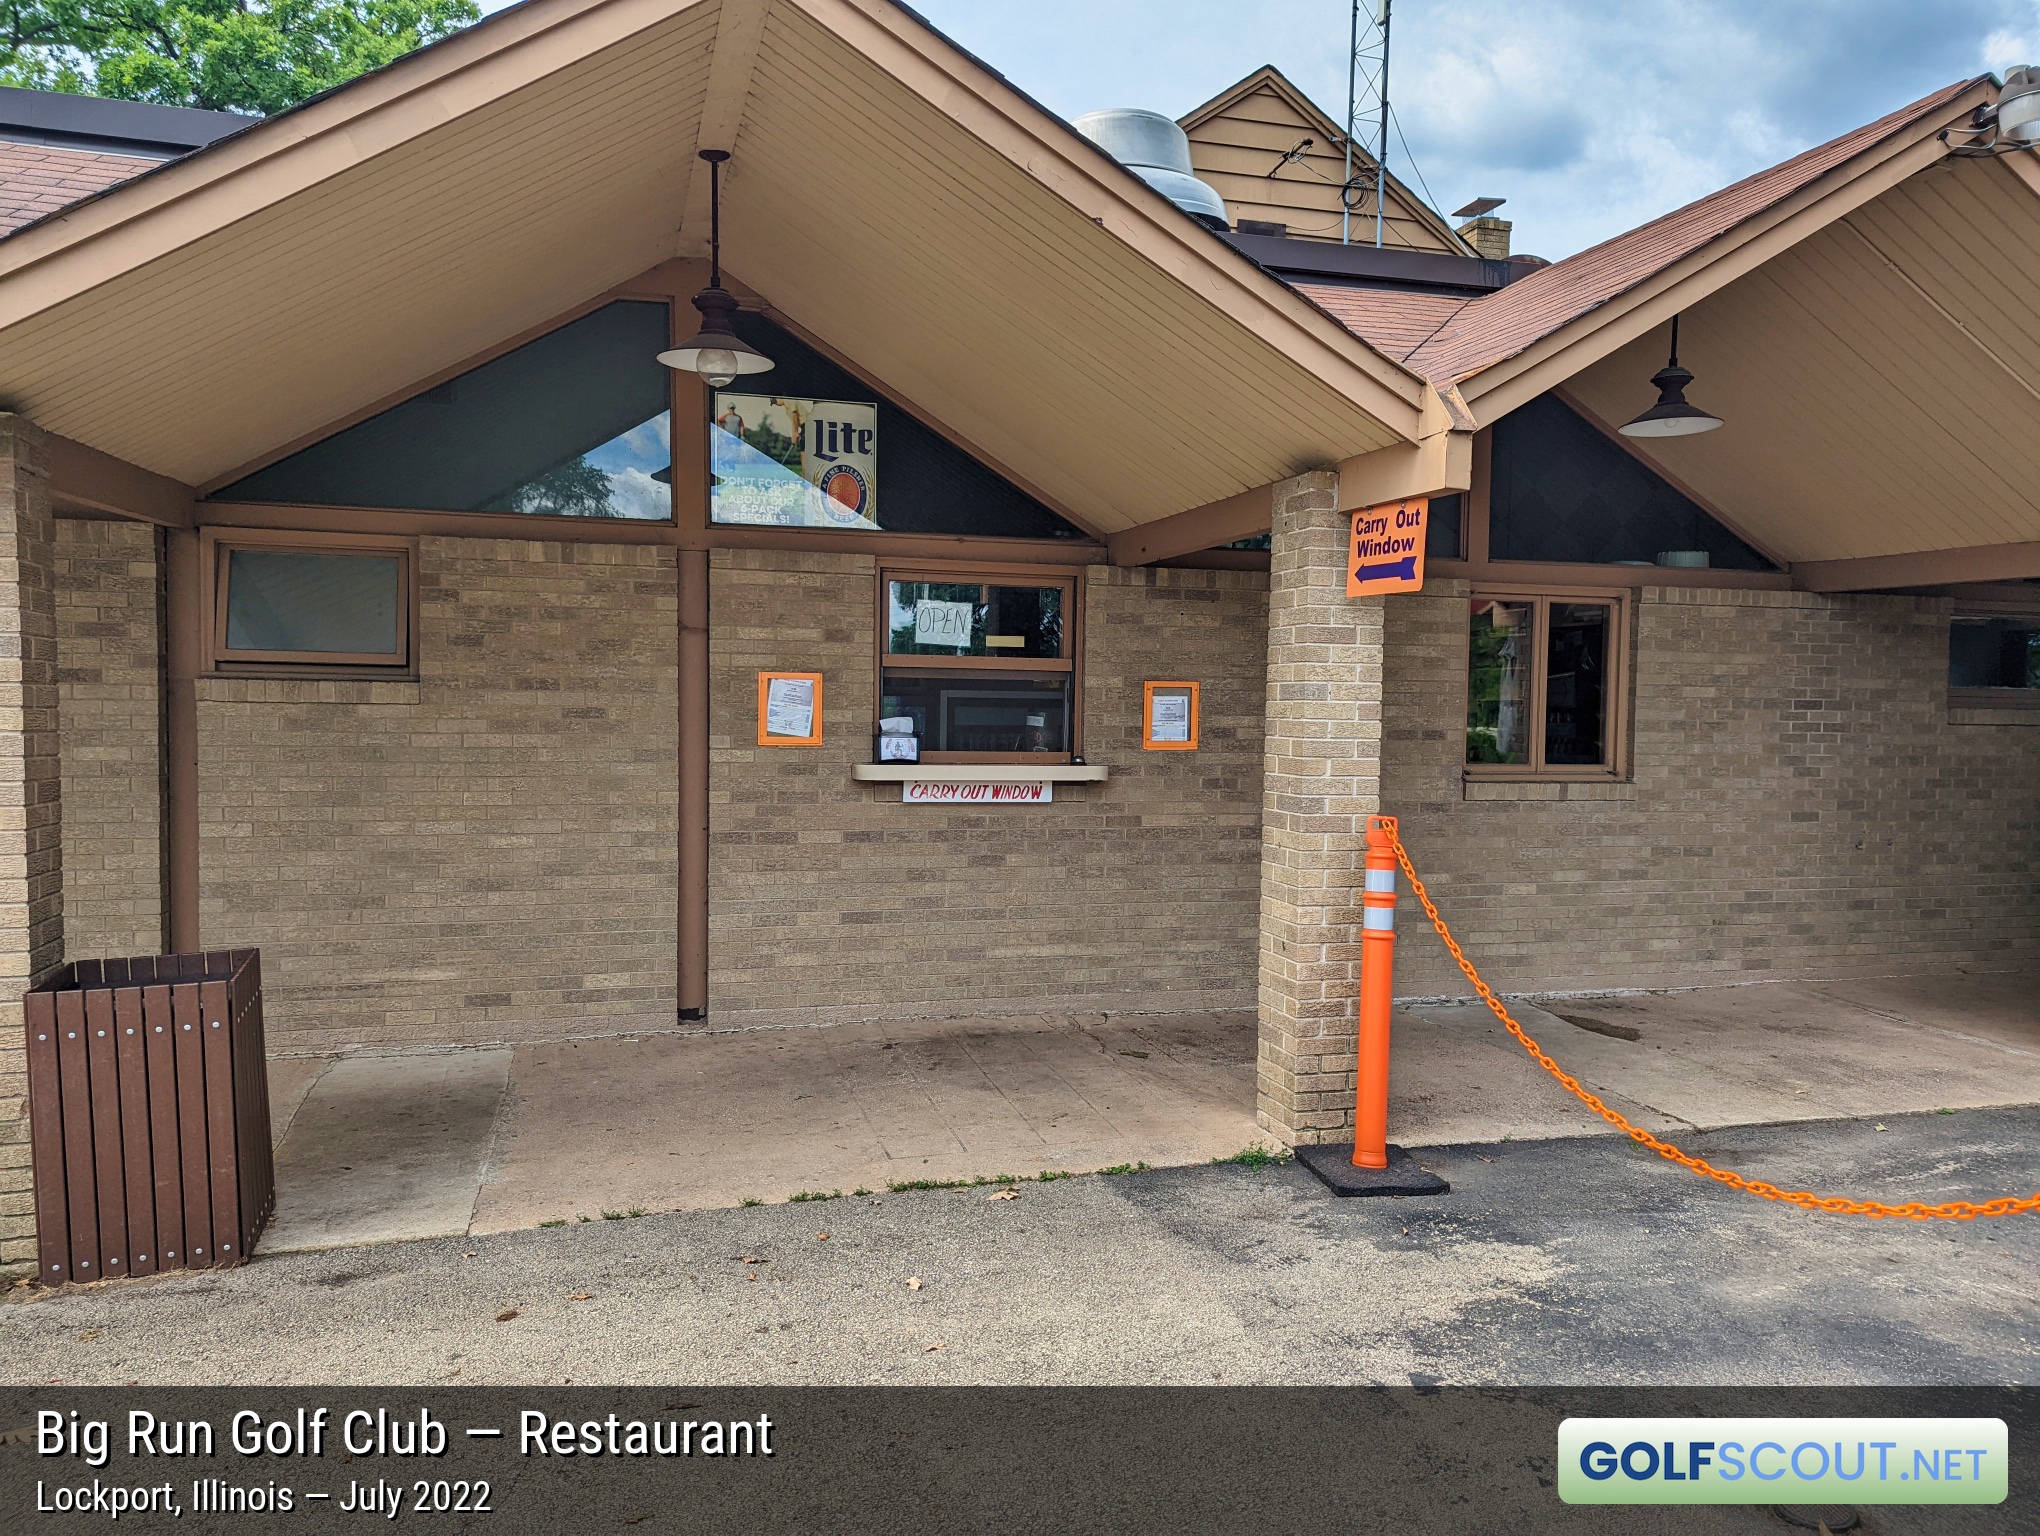 Photo of the restaurant at Big Run Golf Club in Lockport, Illinois. 